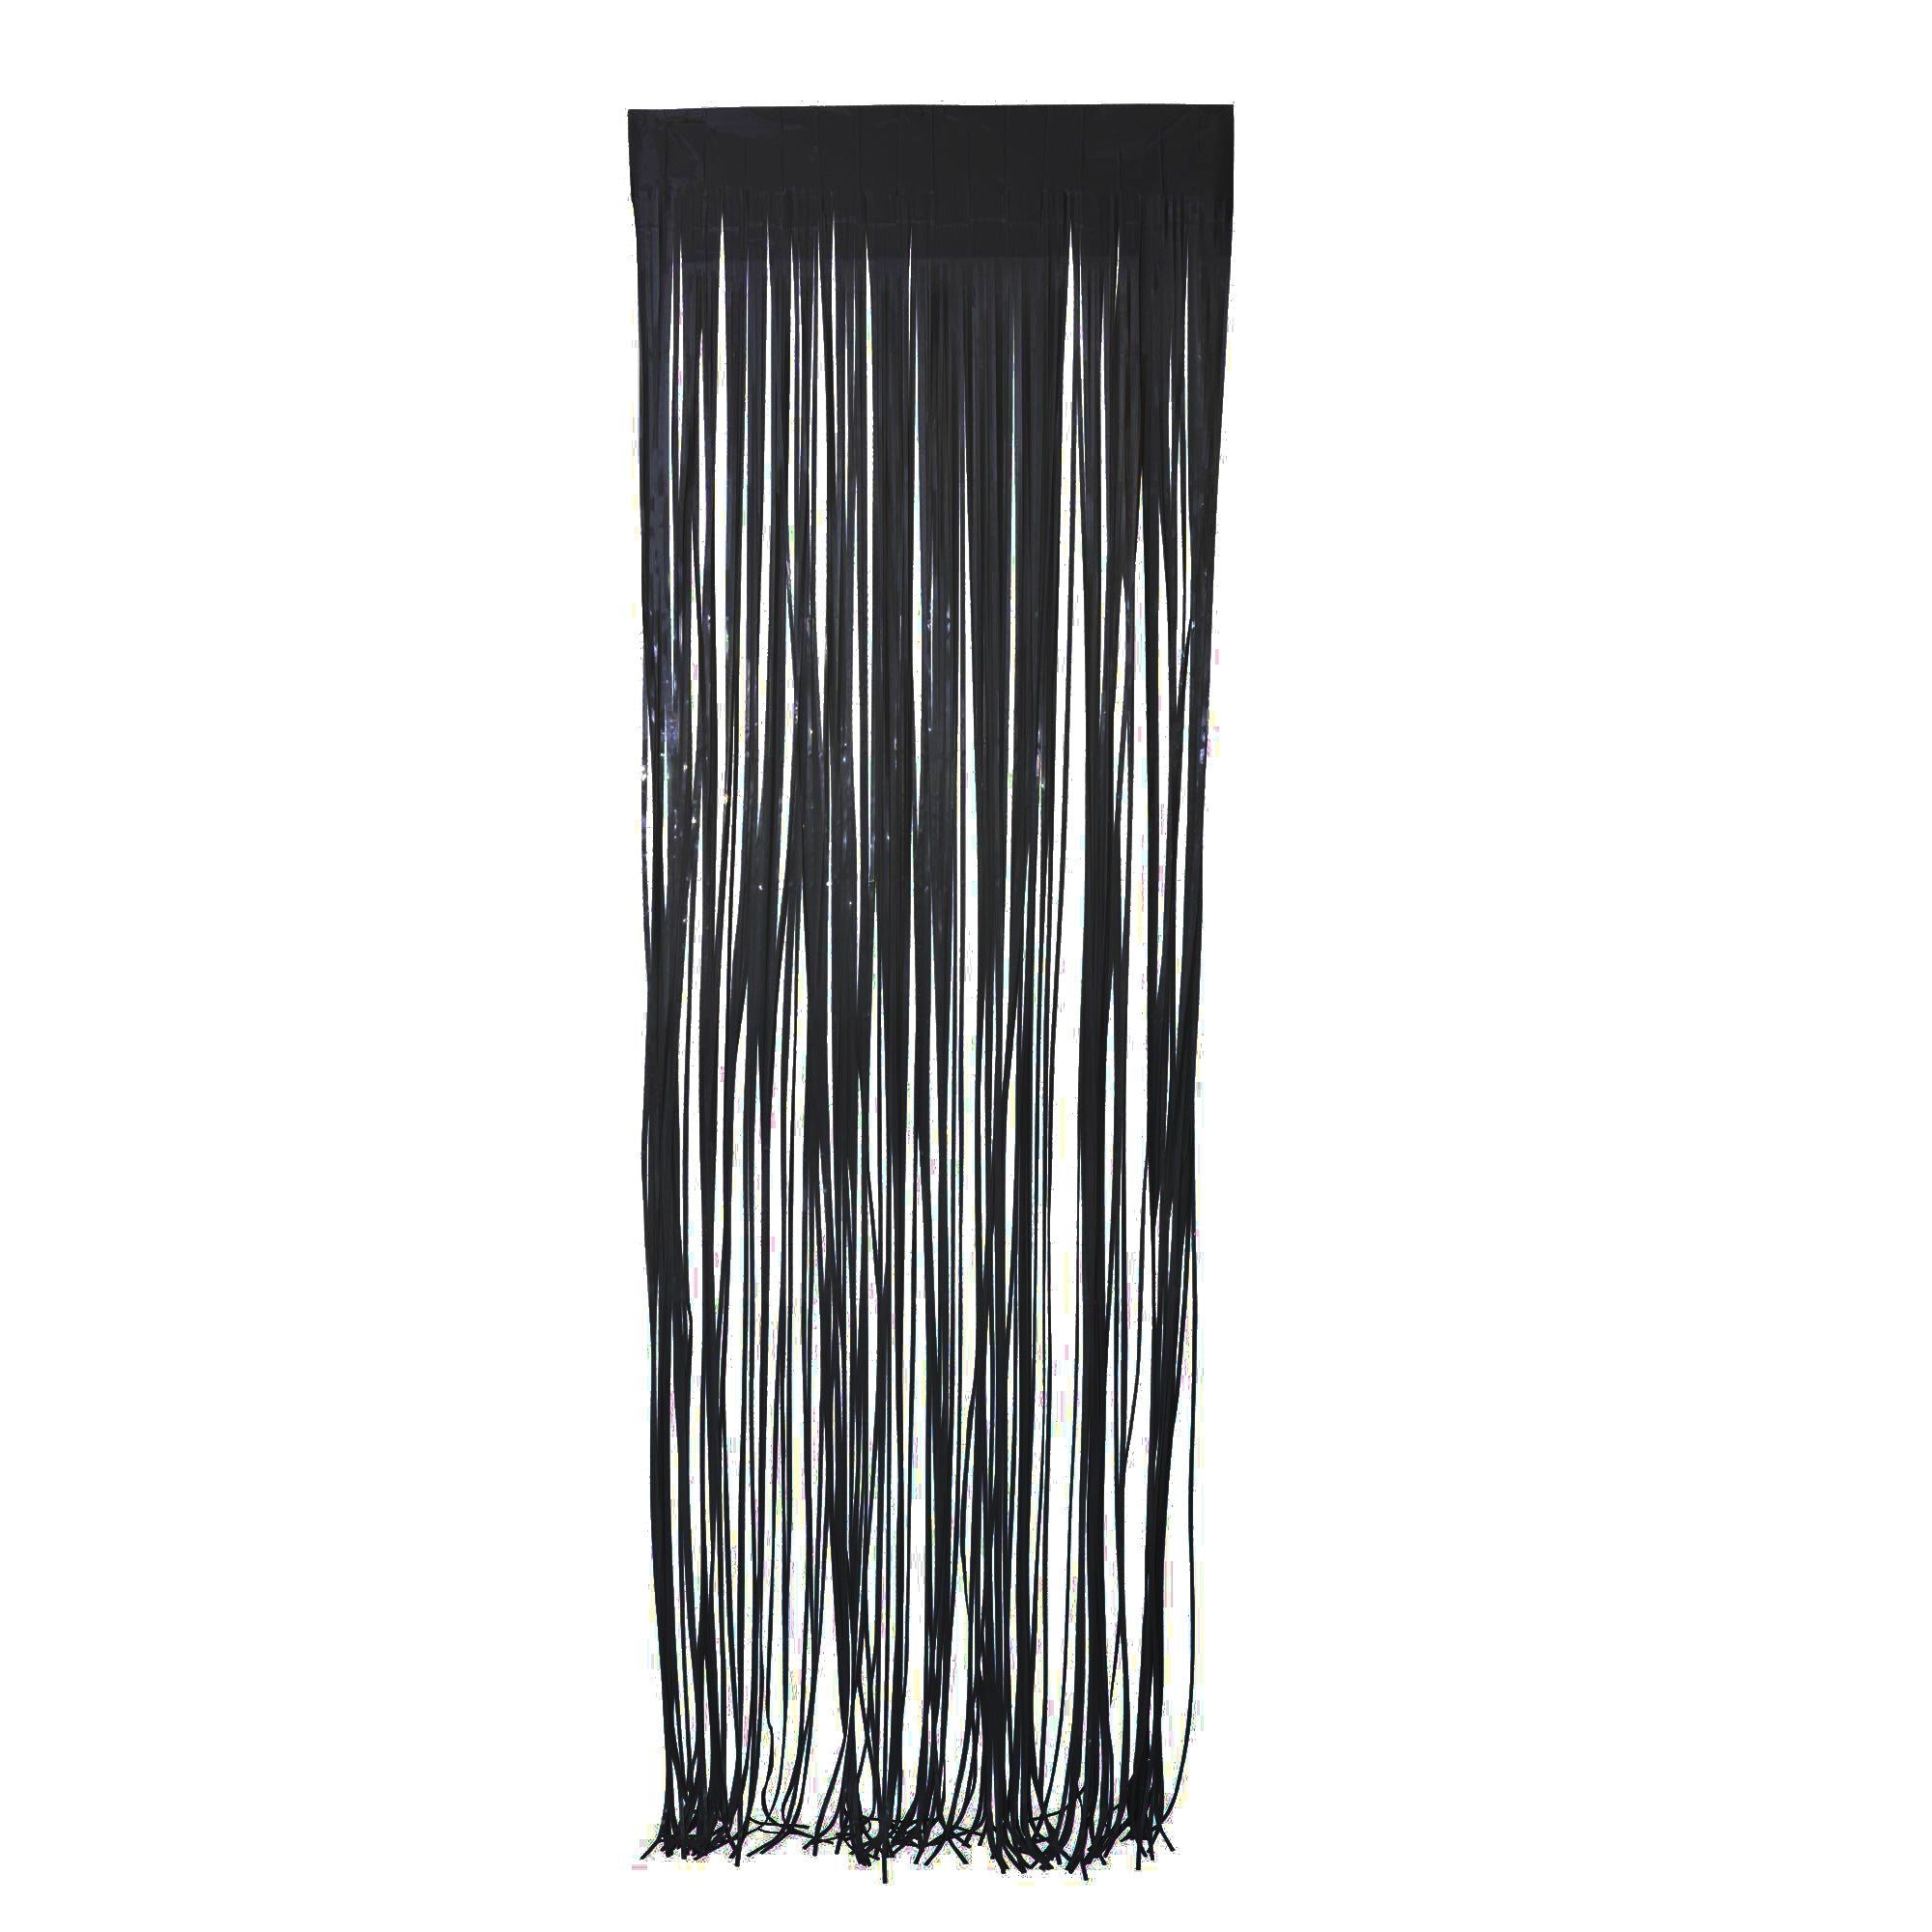 Black Metallic Fringe Curtain, 40 x 118 Inches, 1 Count